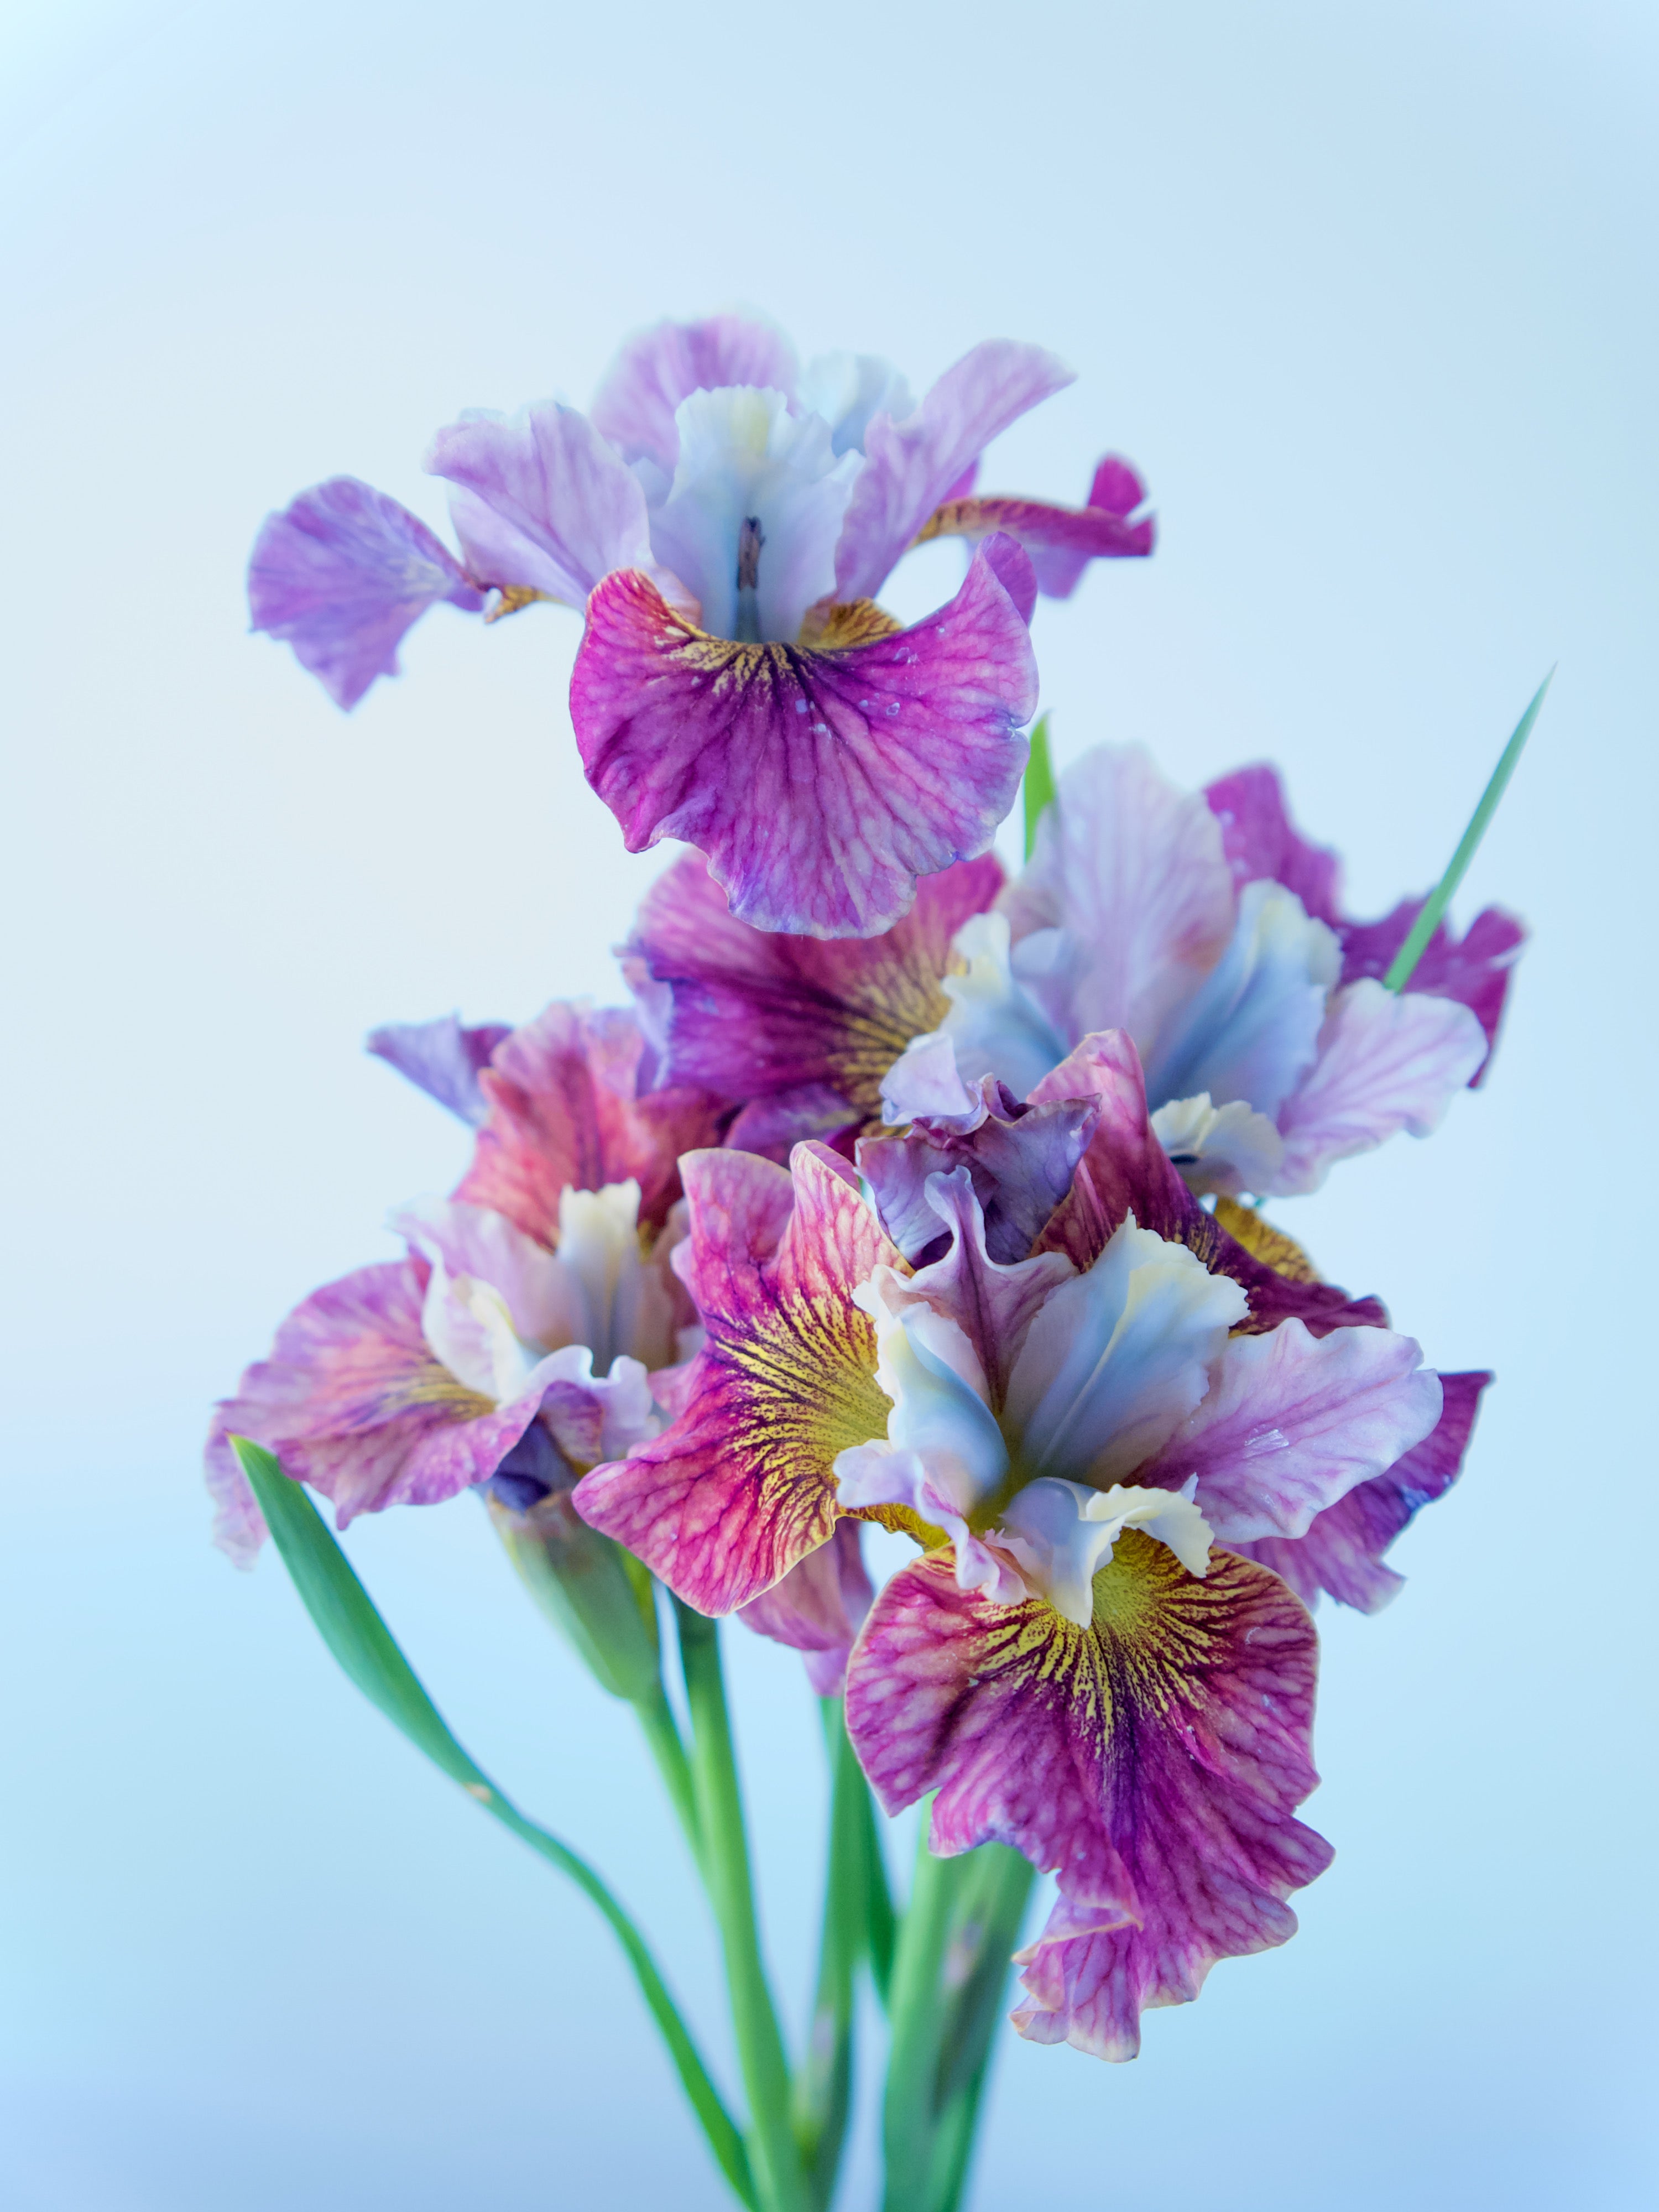 Bearded Iris. Portland Oregon Florists Fieldwork Flowers located at Wellspent Market. Order Flowers Online.